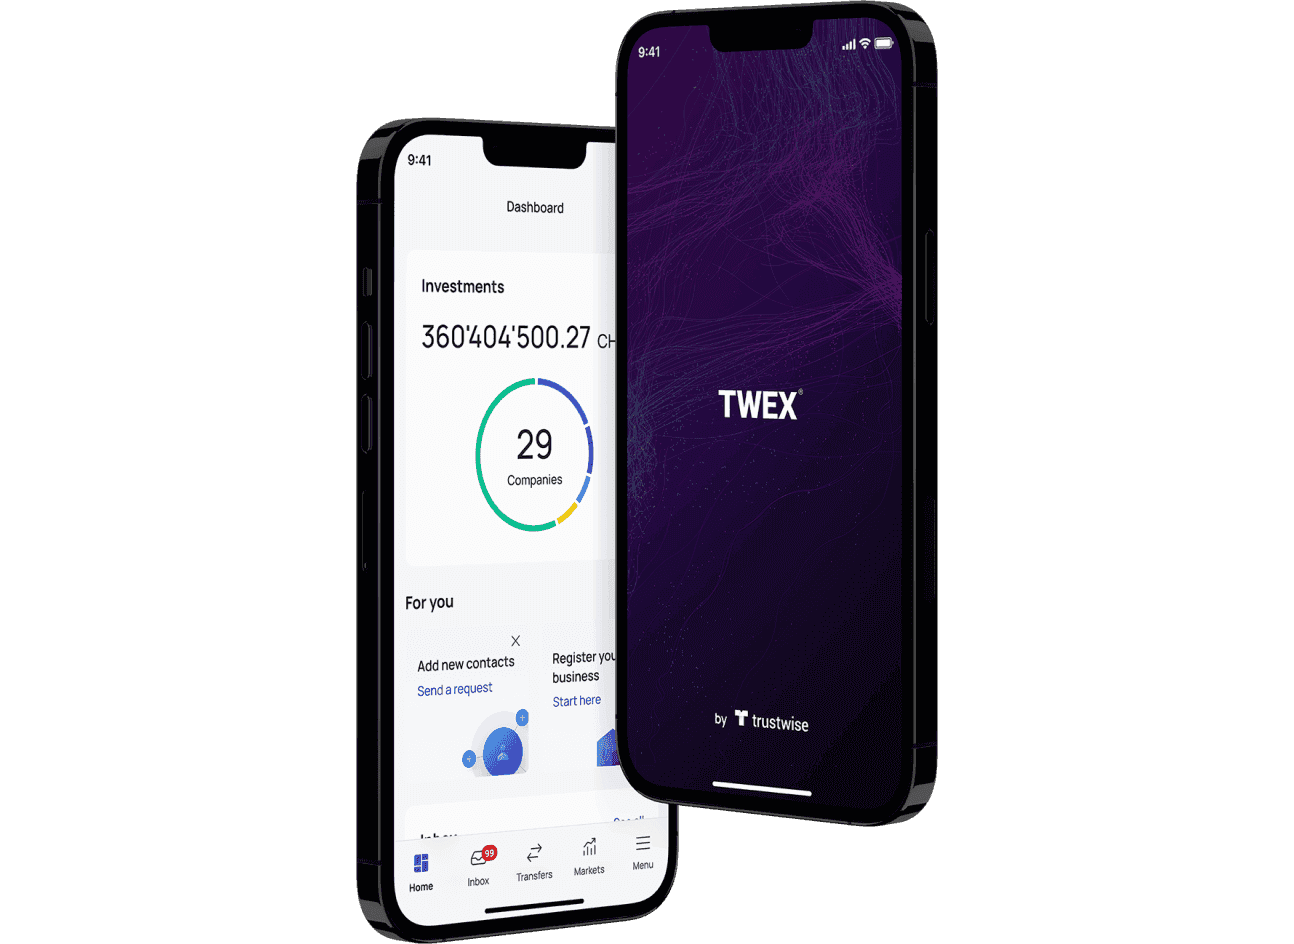 Two smartphones showing investors dashboard and welcome screen of TWEX app